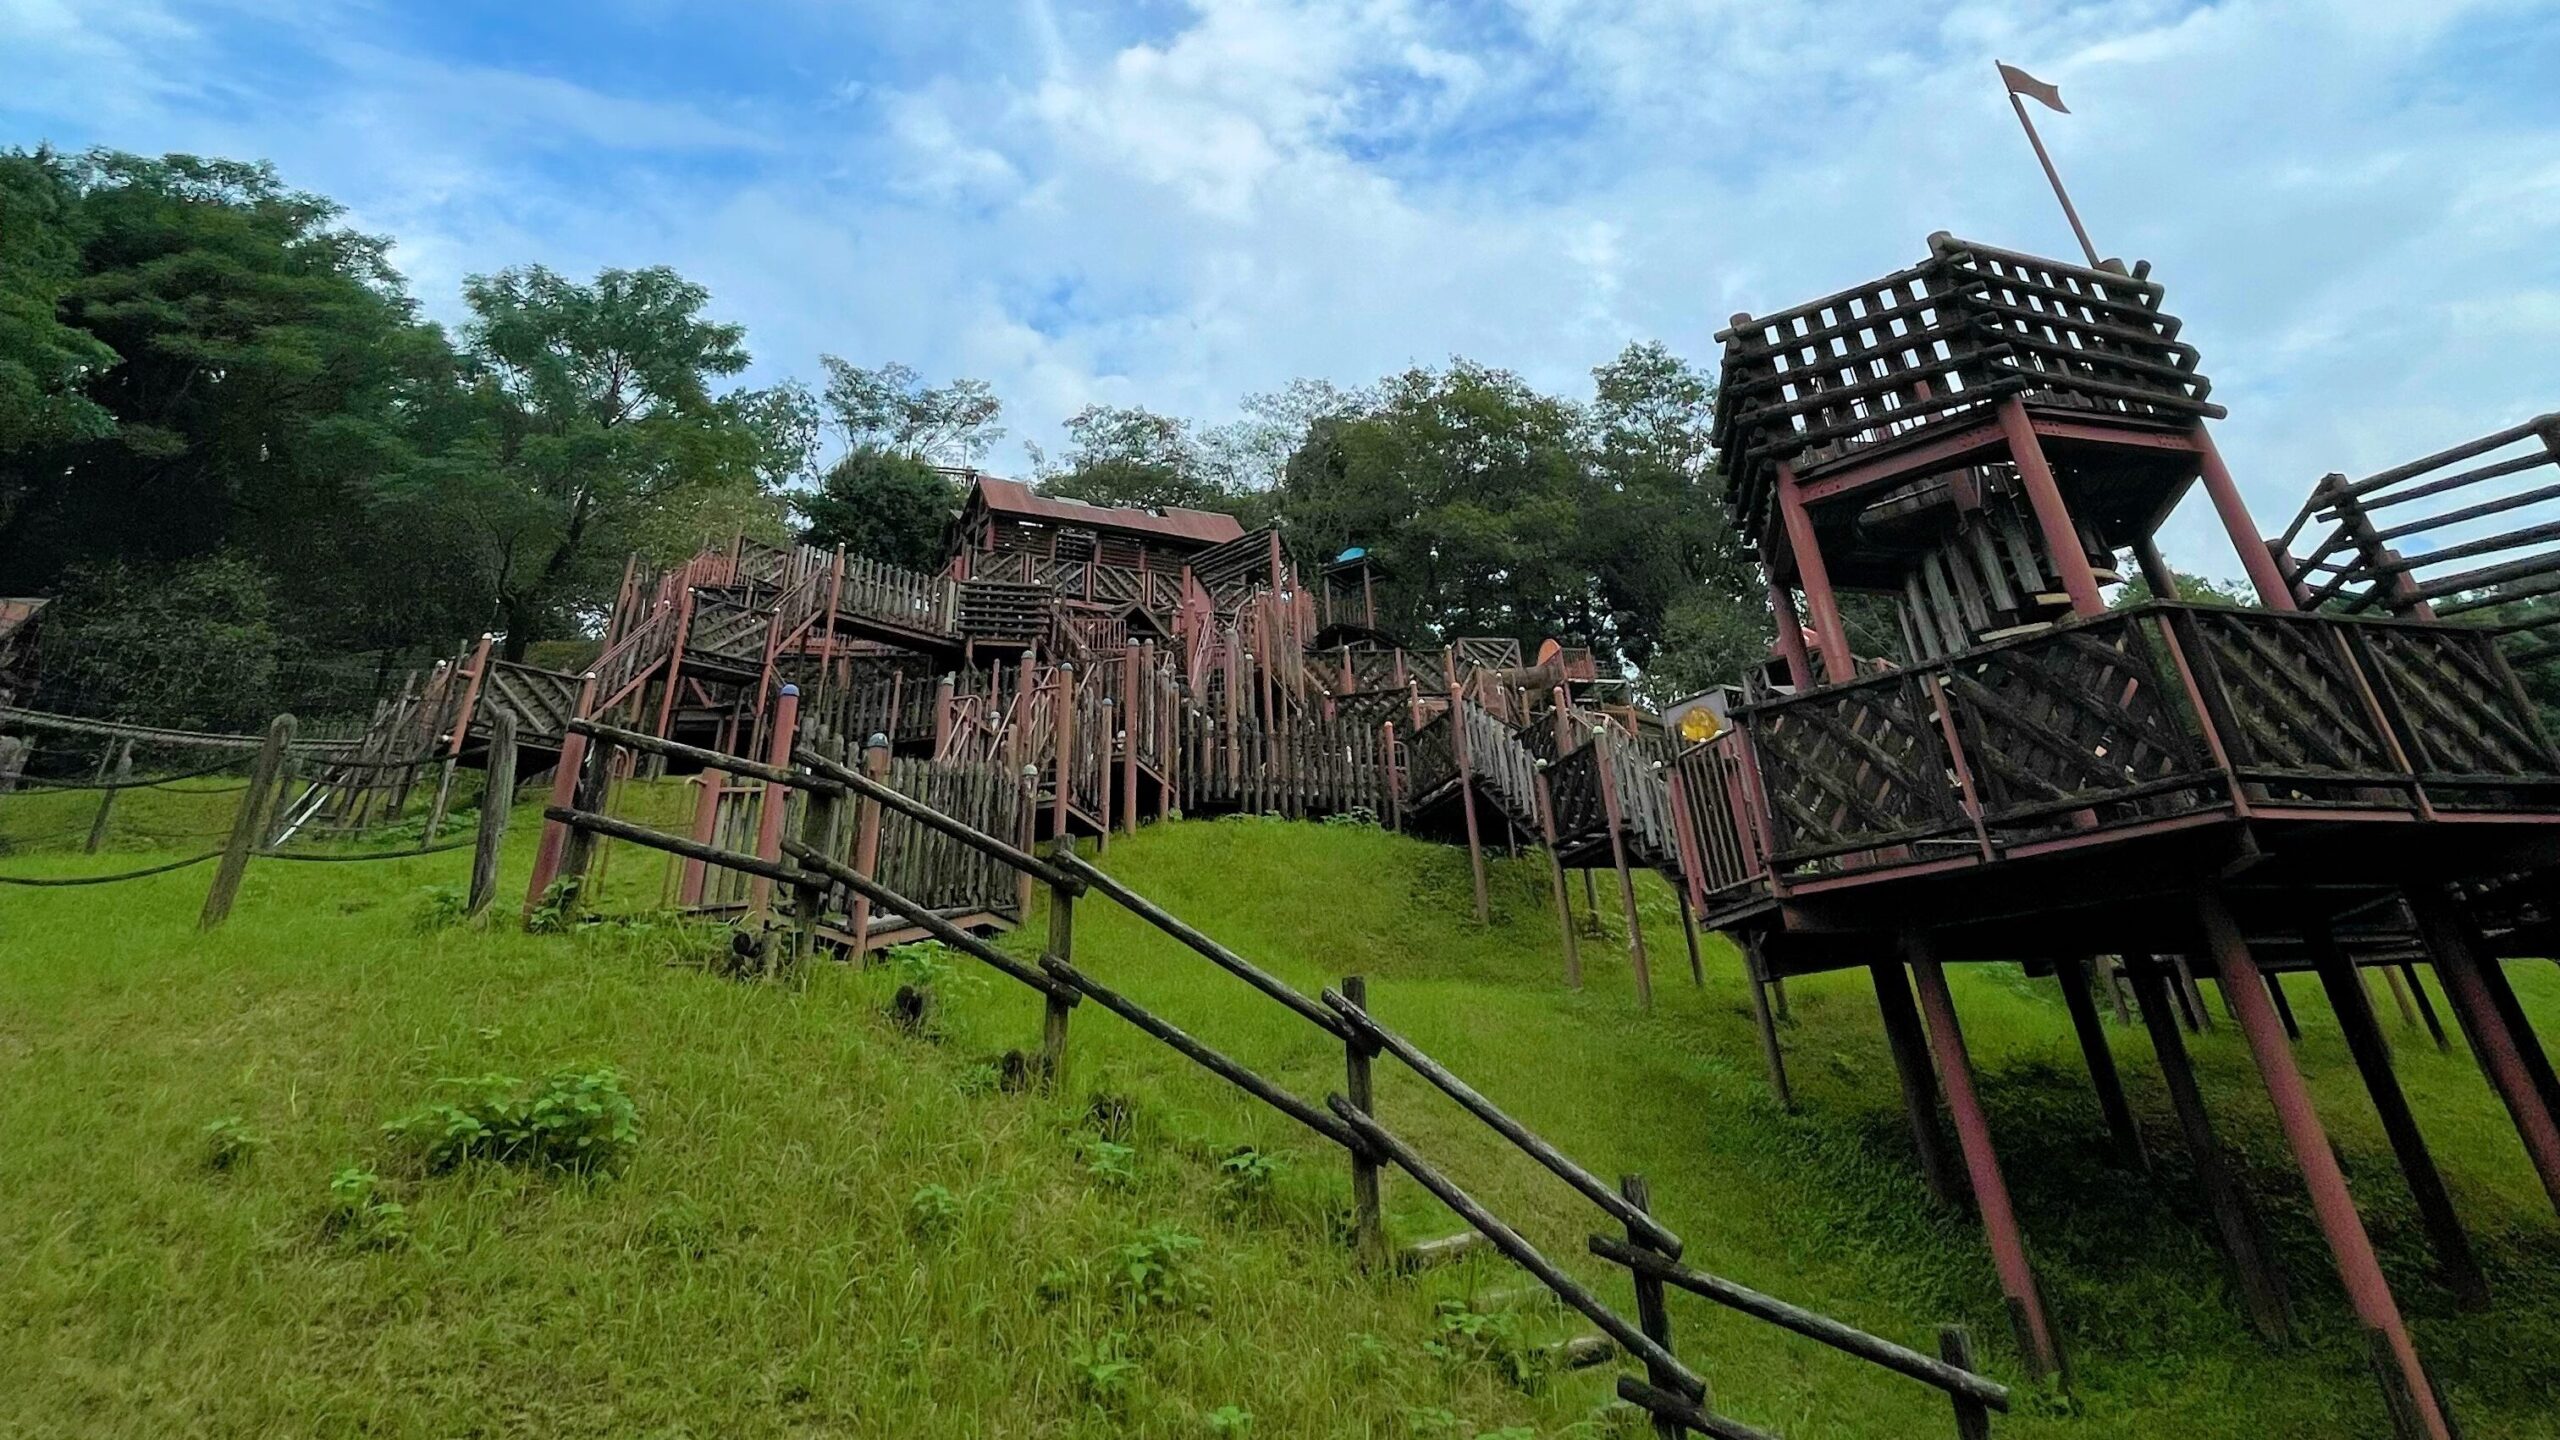 鹿児島県立北薩広域公園内にある大型冒険遊具